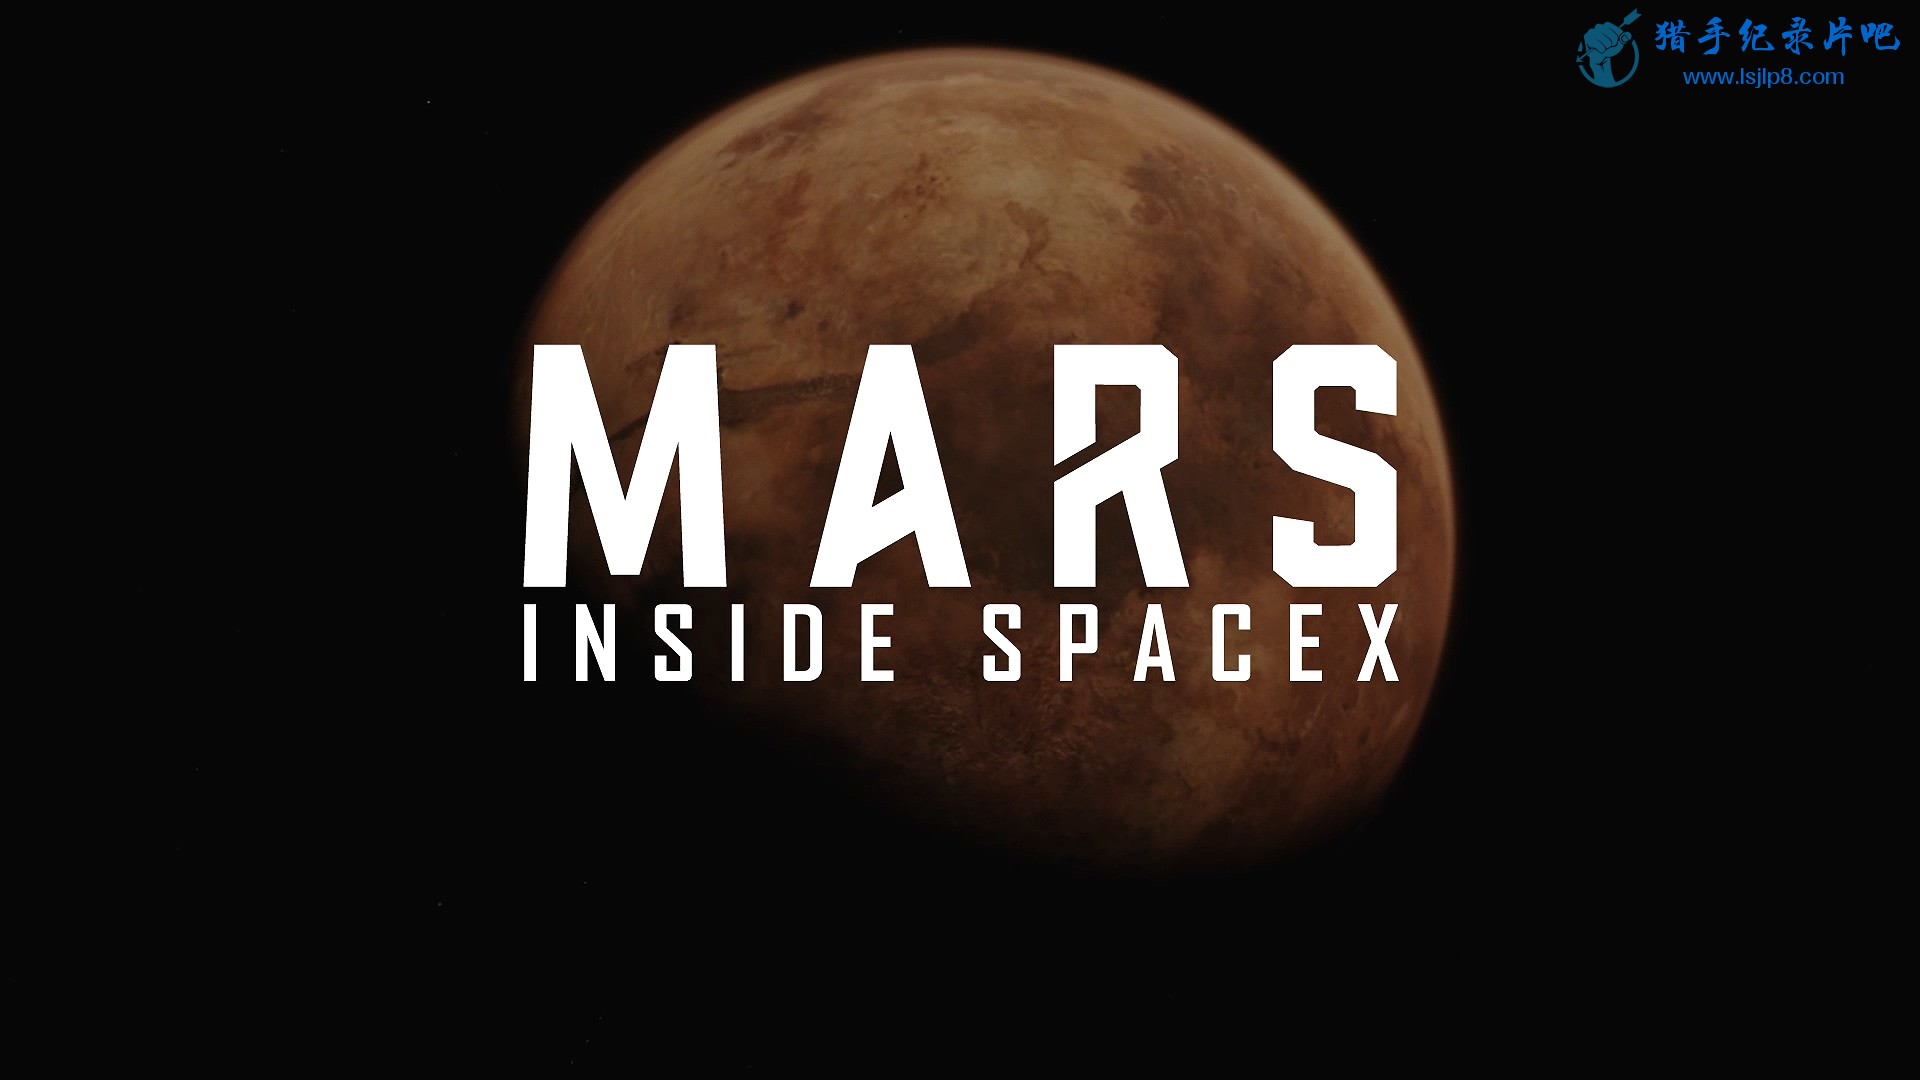 MARS.Inside.SpaceX.2018.1080p.AMZN.WEB-DL.DDP5.1.H.264-QOQ.mkv_20200807_091539.214.jpg